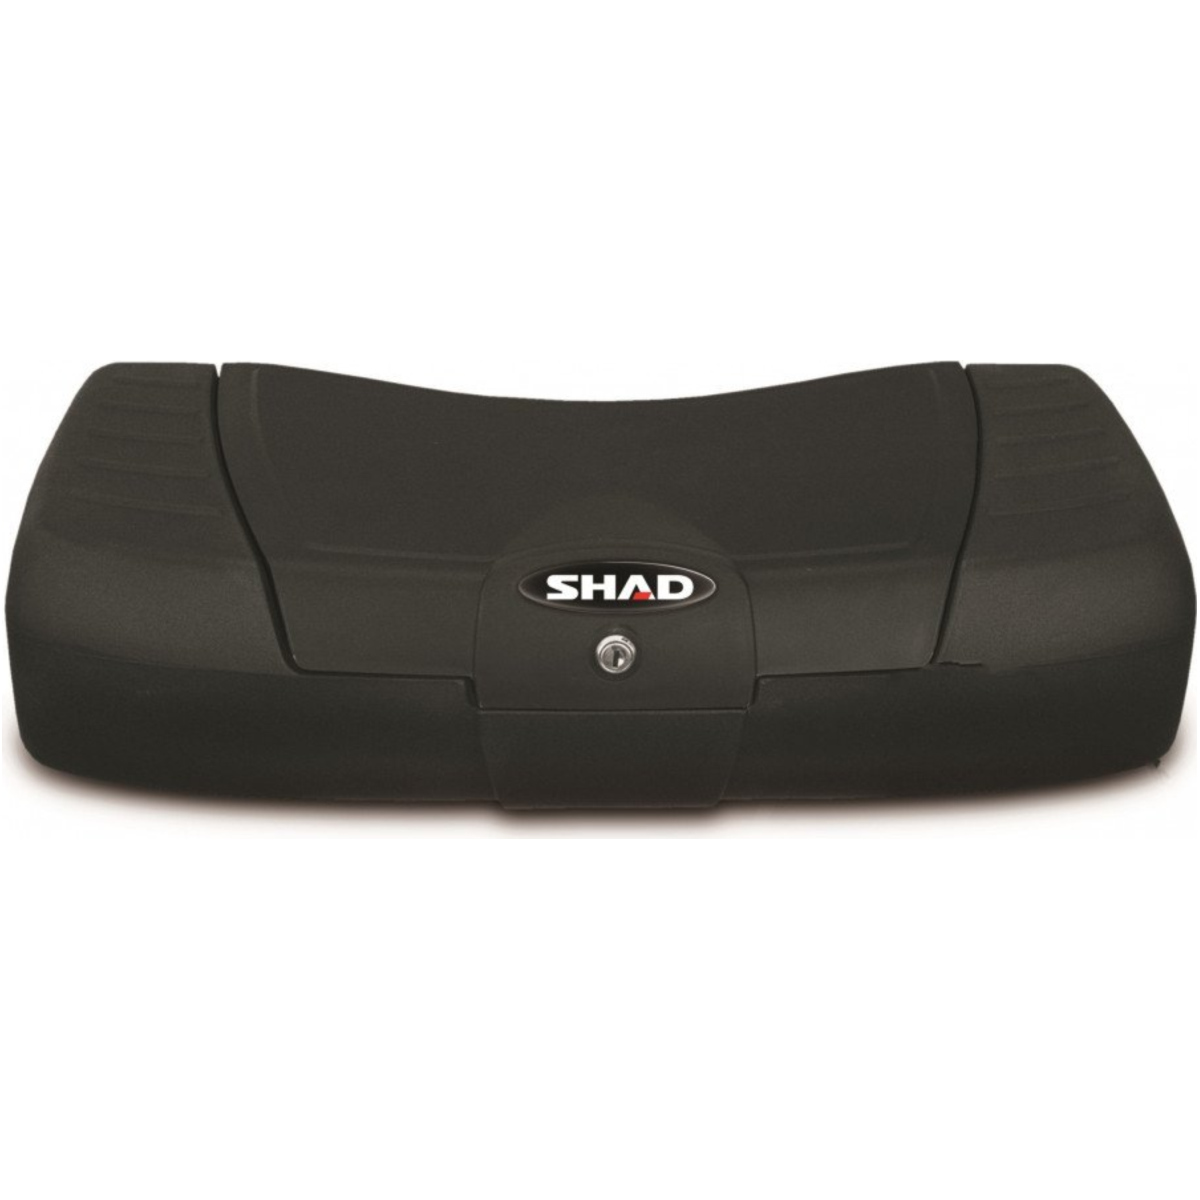 Shad d0q200 quad koffer schwarz shad von SHAD